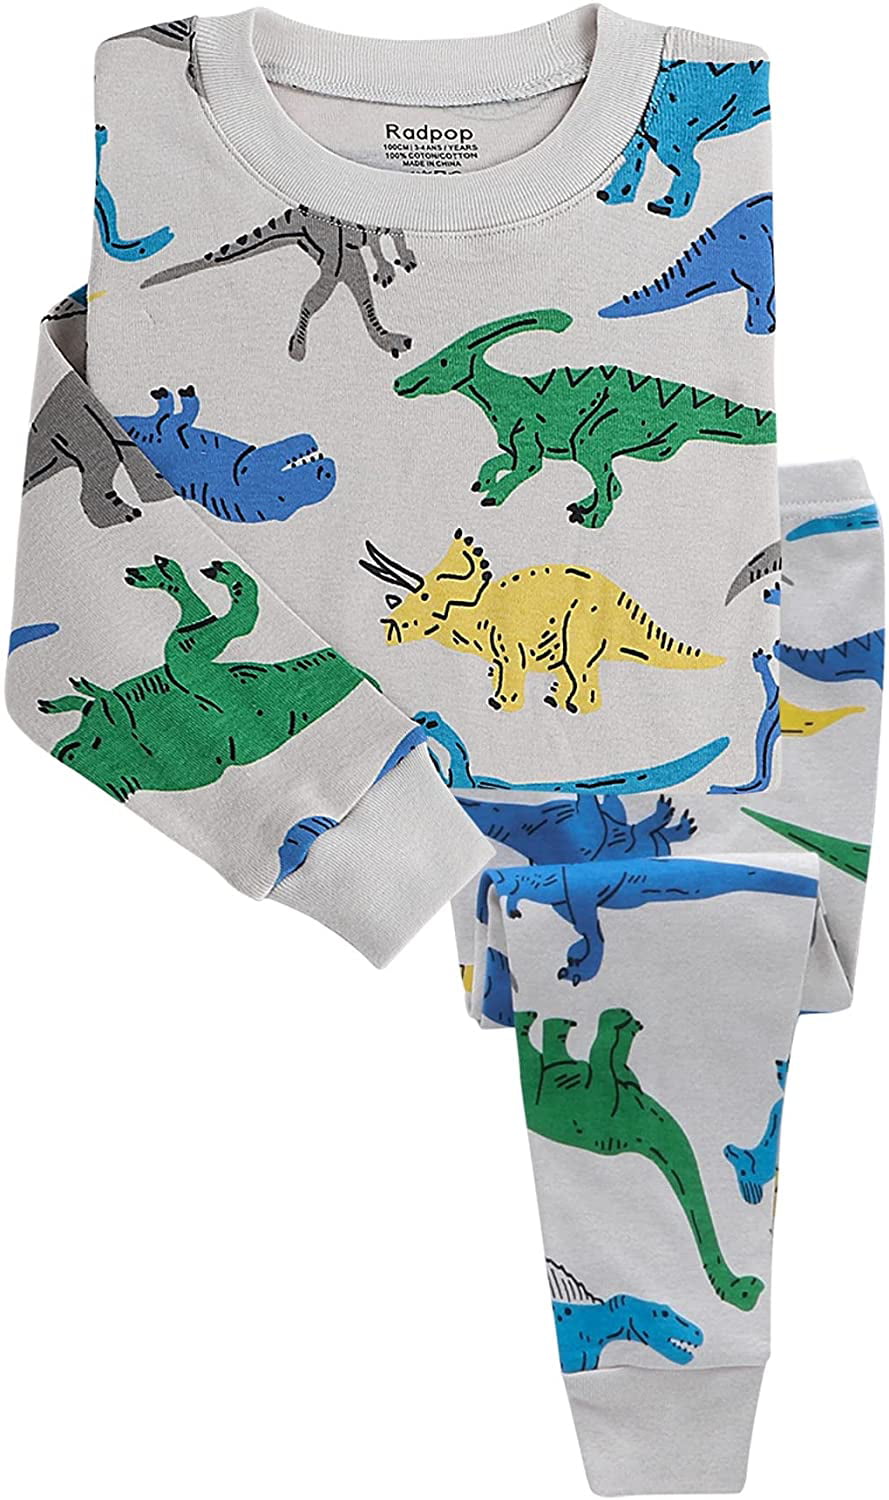 100% Cotton 2-Piece PJ Set Radpop Boys Dinosaur Pajamas 